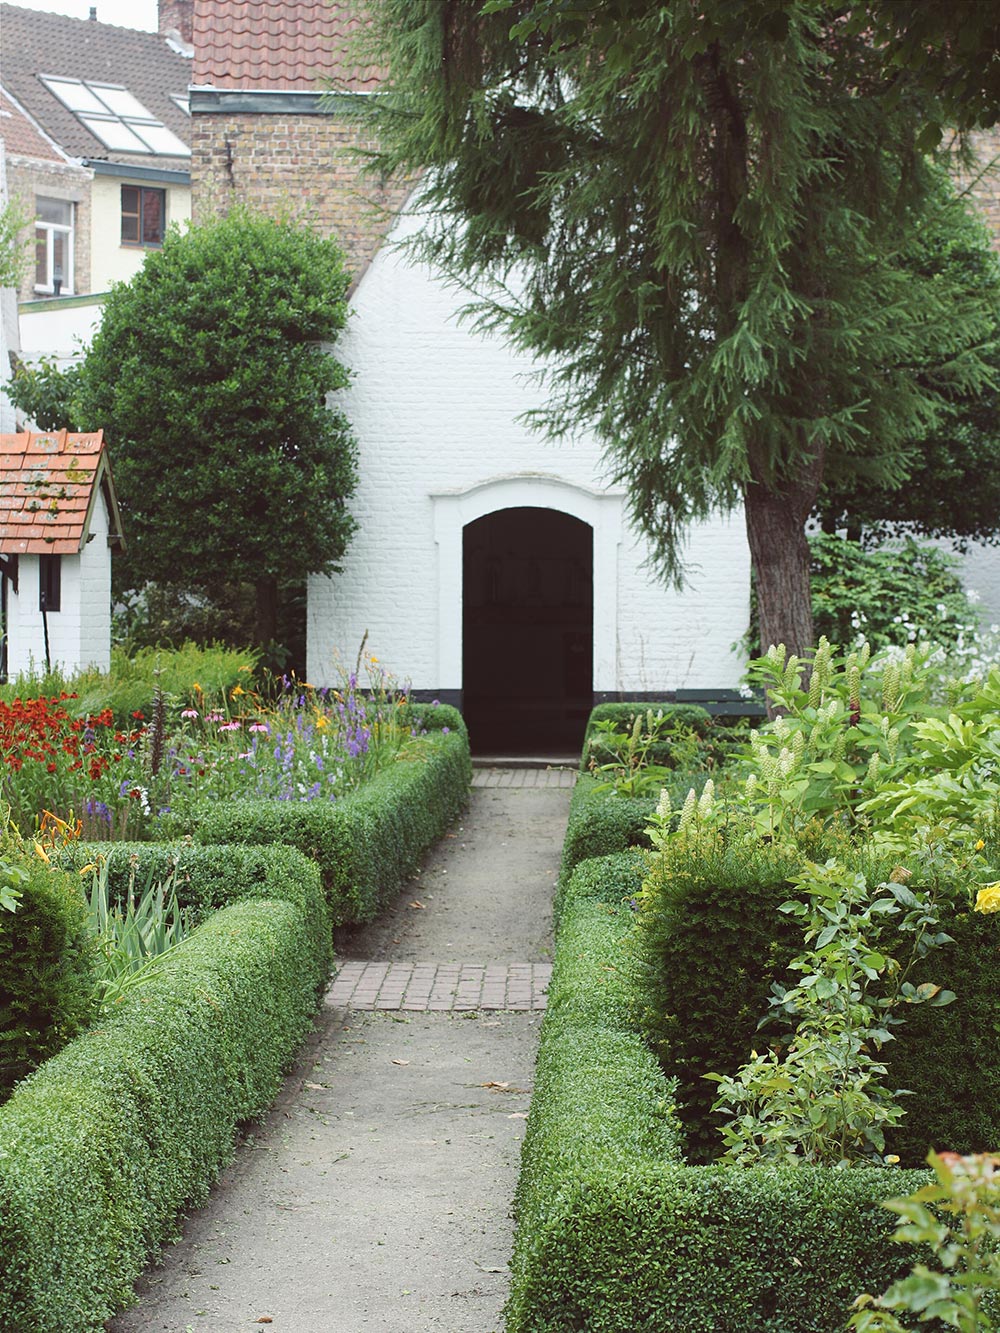 Godhus Gardens in Belgium by Rochelle Greayer pithandvigor